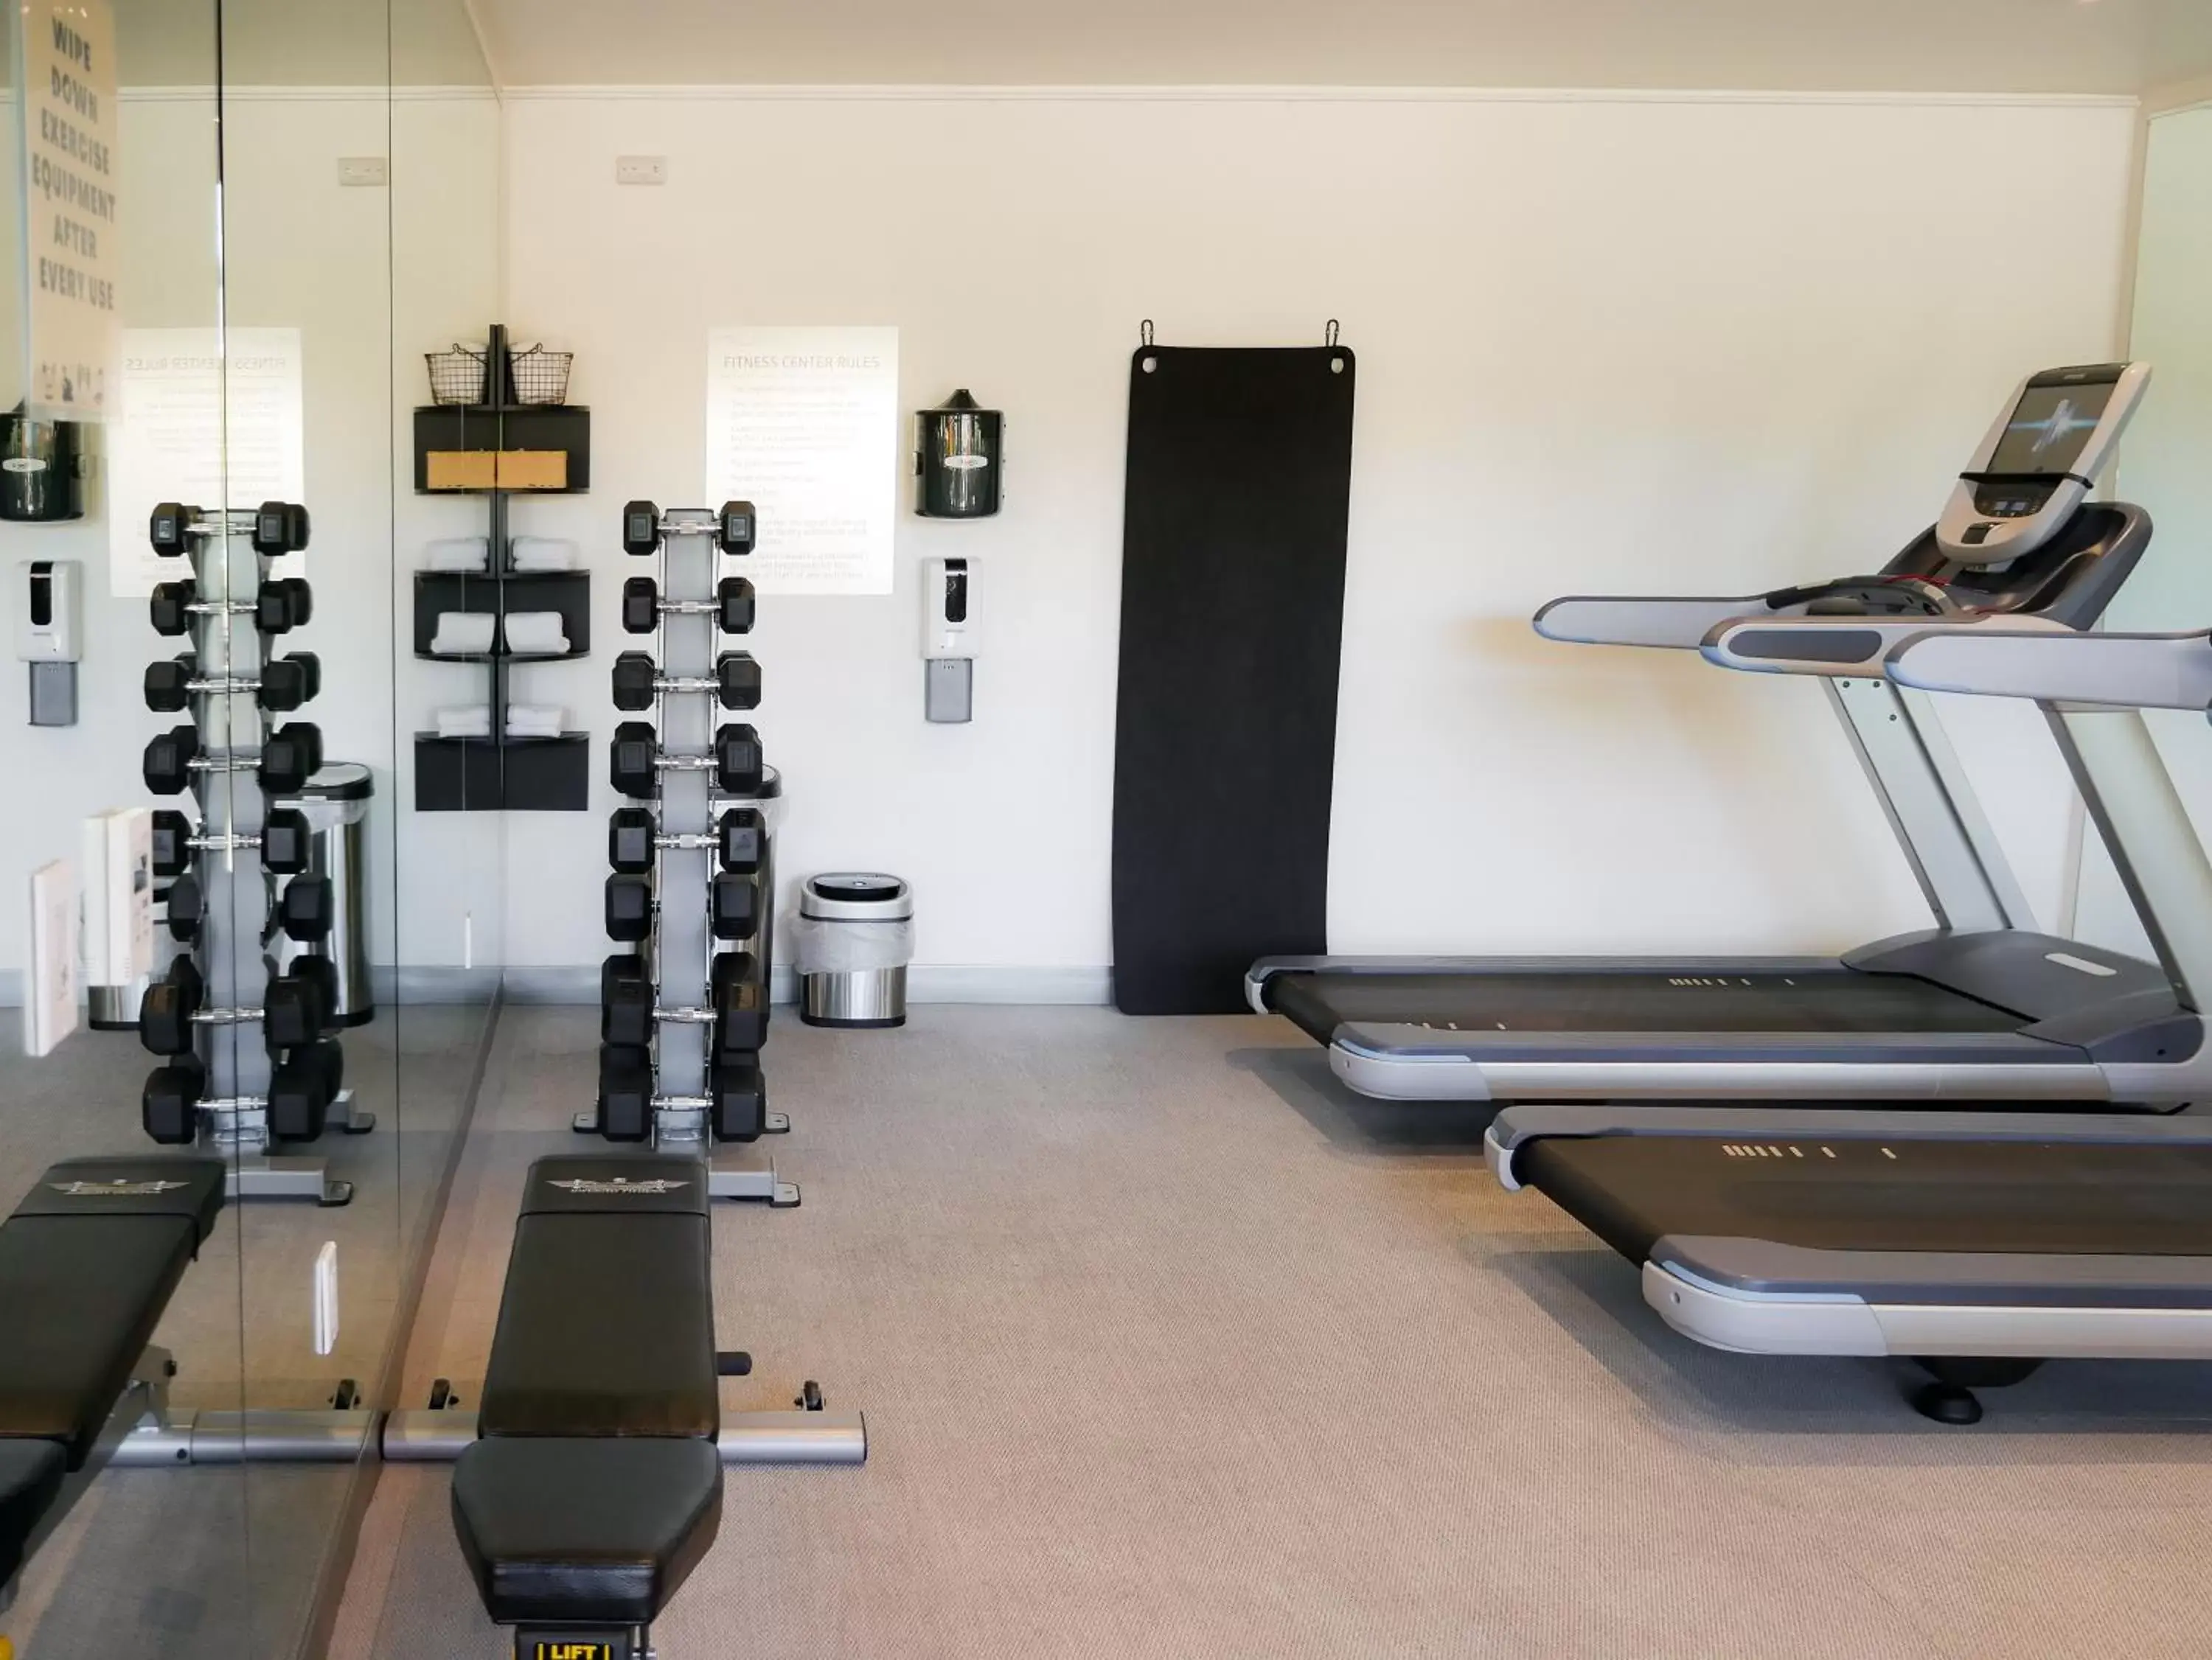 Fitness centre/facilities, Fitness Center/Facilities in The Nest Hotel Palo Alto